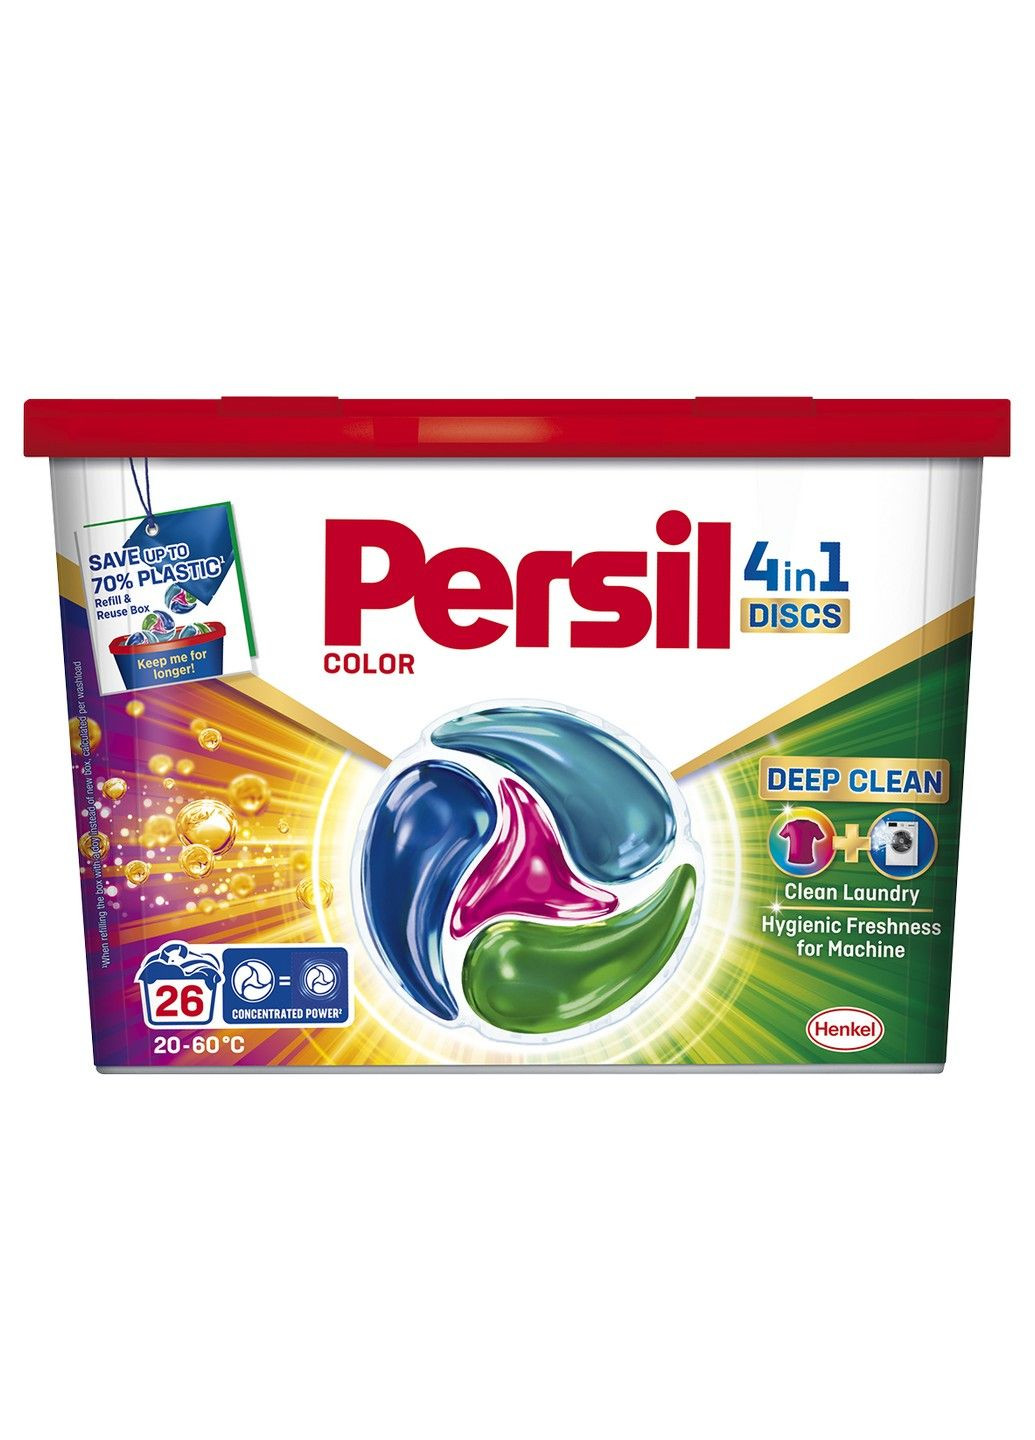 Диски для прання 4in1 Discs Color Deep Clean 26 шт Persil (293343751)